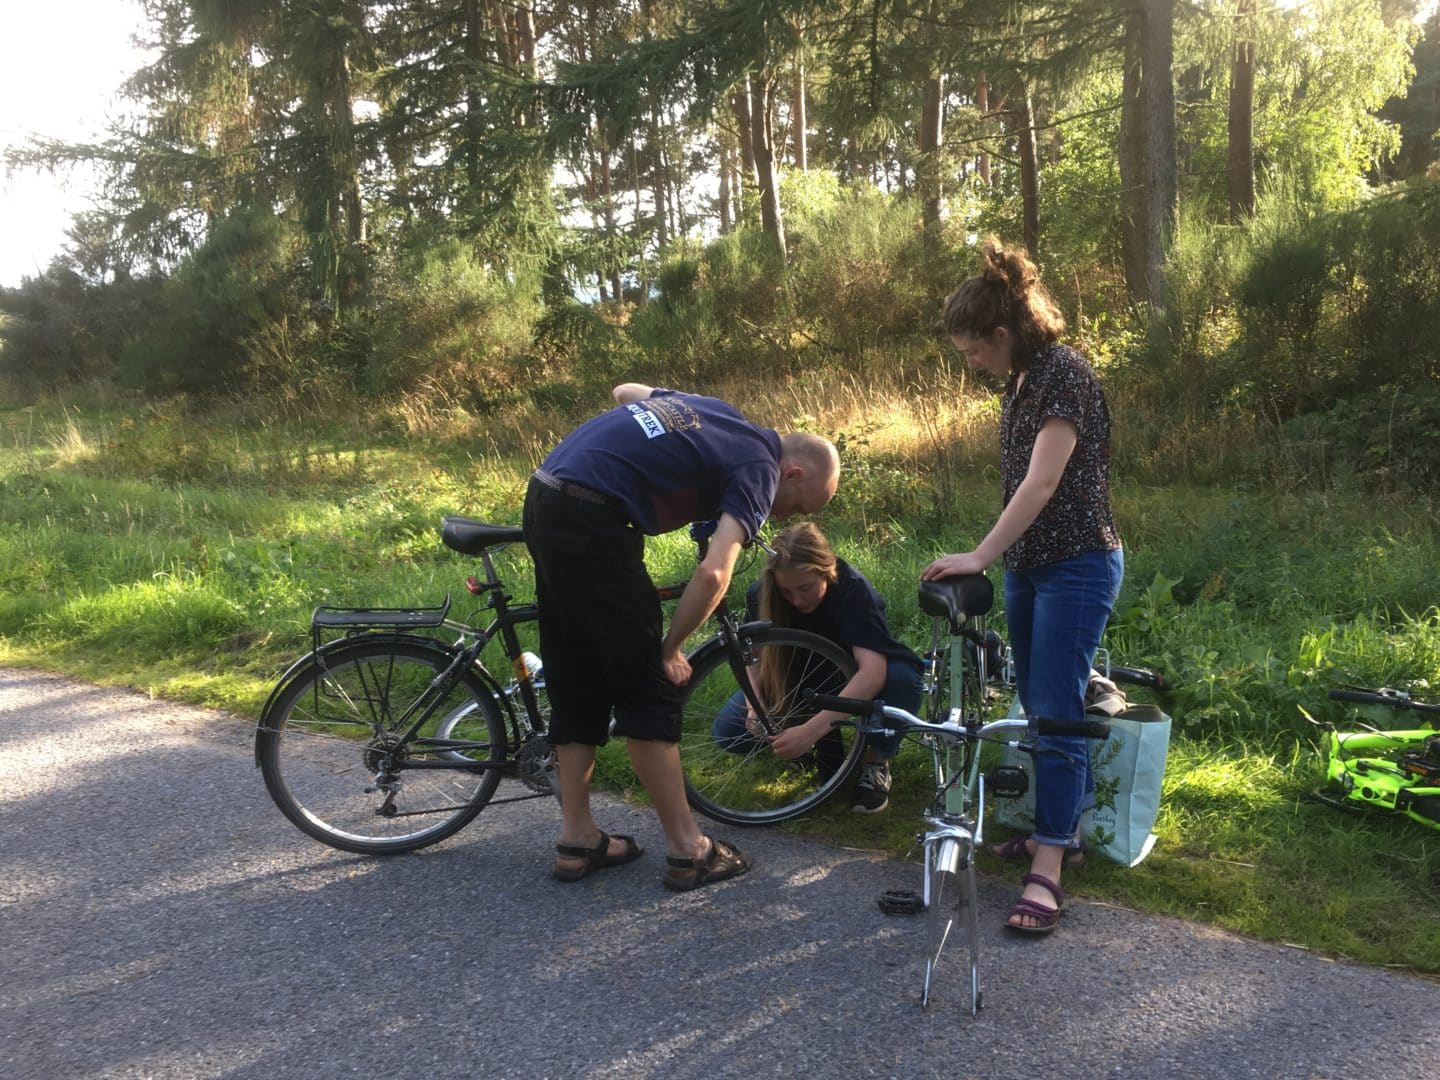 Family group on bike ride